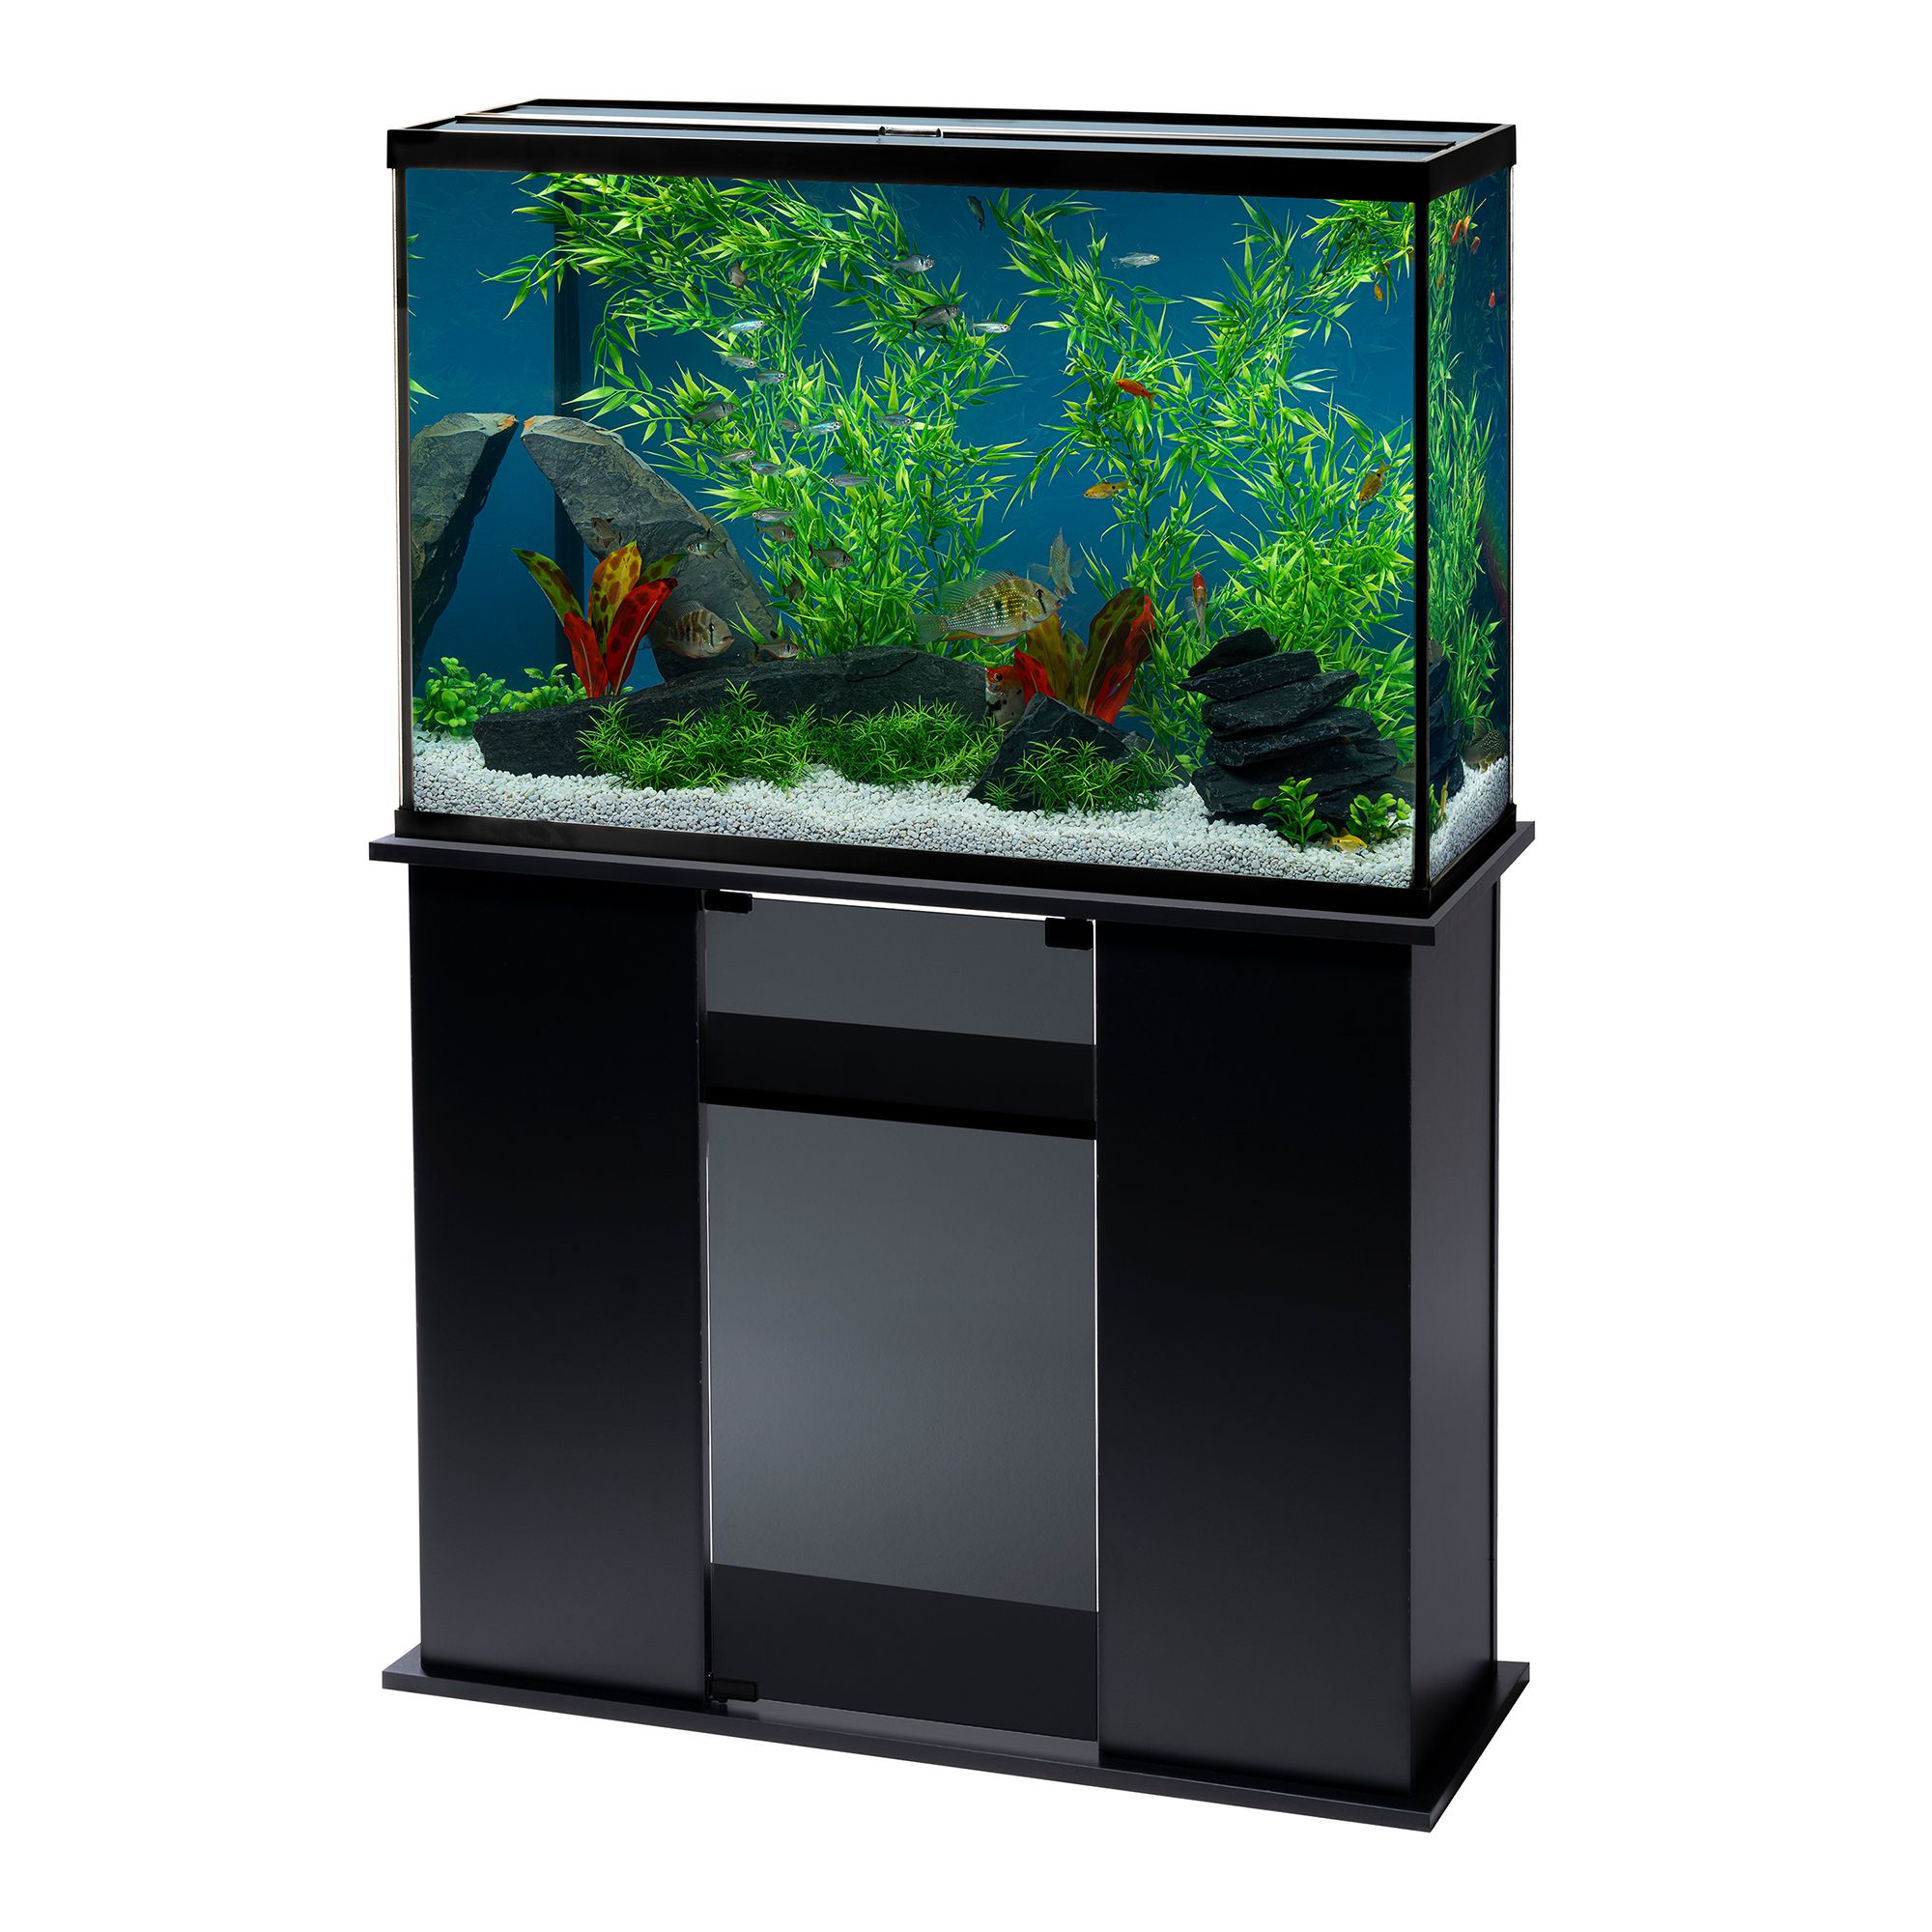 Aquariums & Fish Tanks for Pet Fish